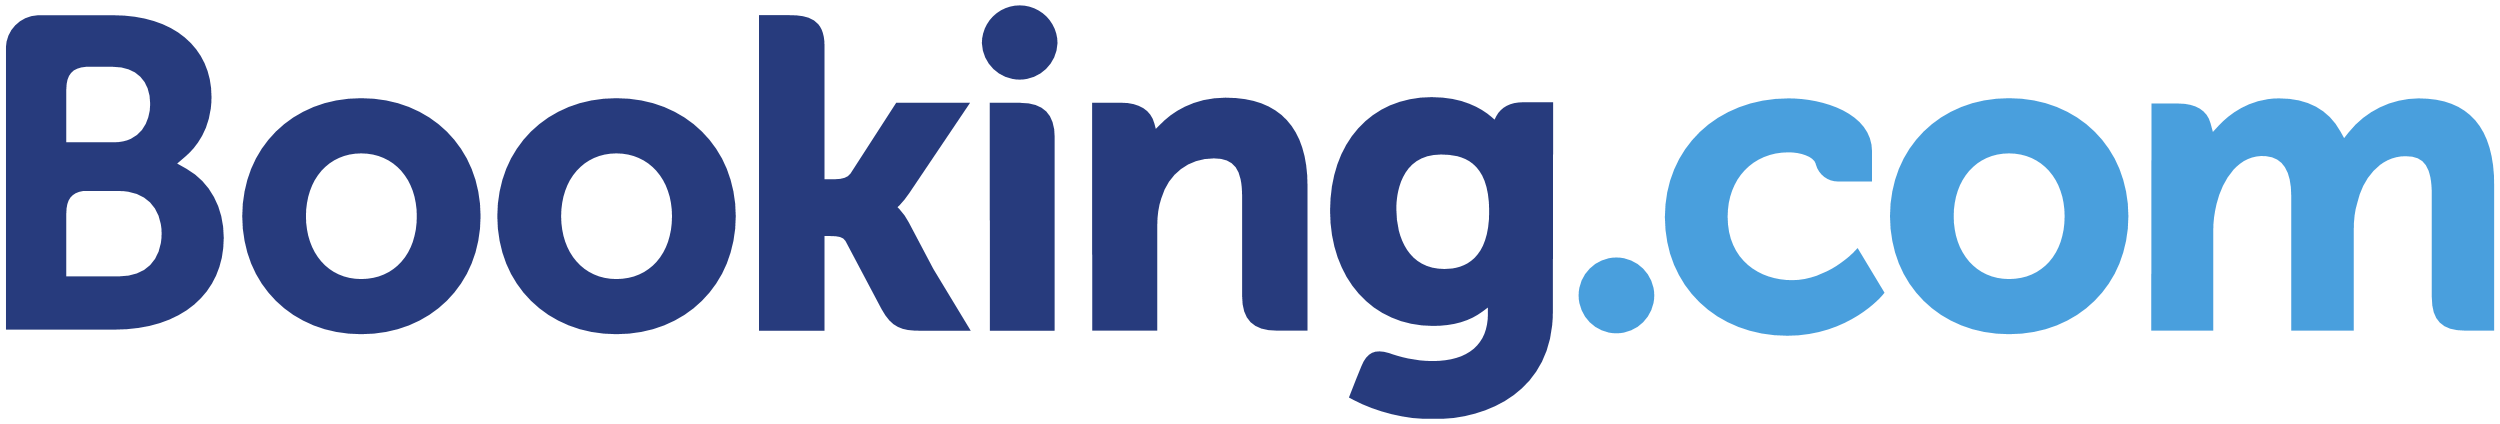 Booking_com_logo_PNG1.png